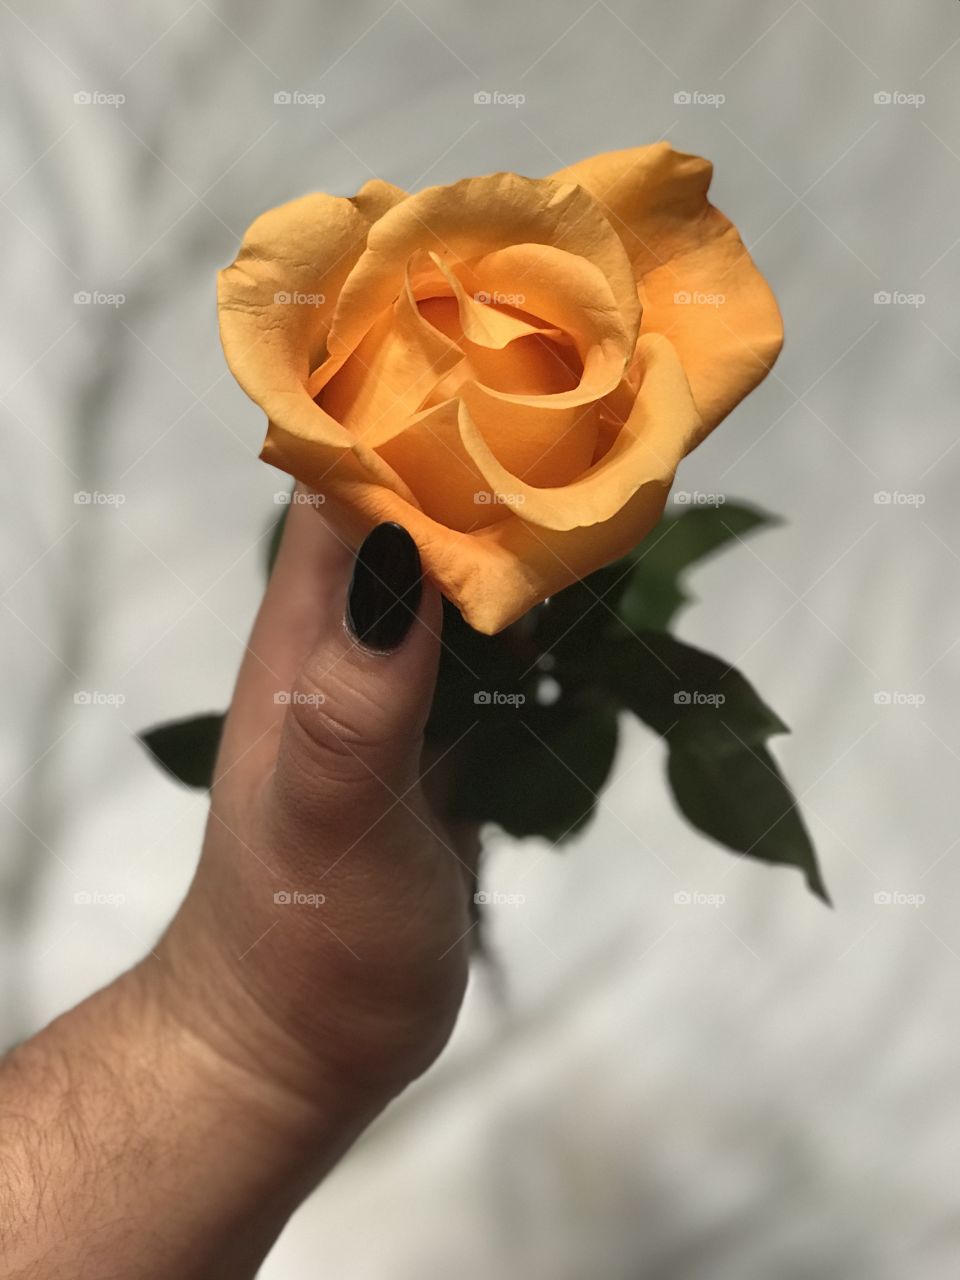 Flower in hand 